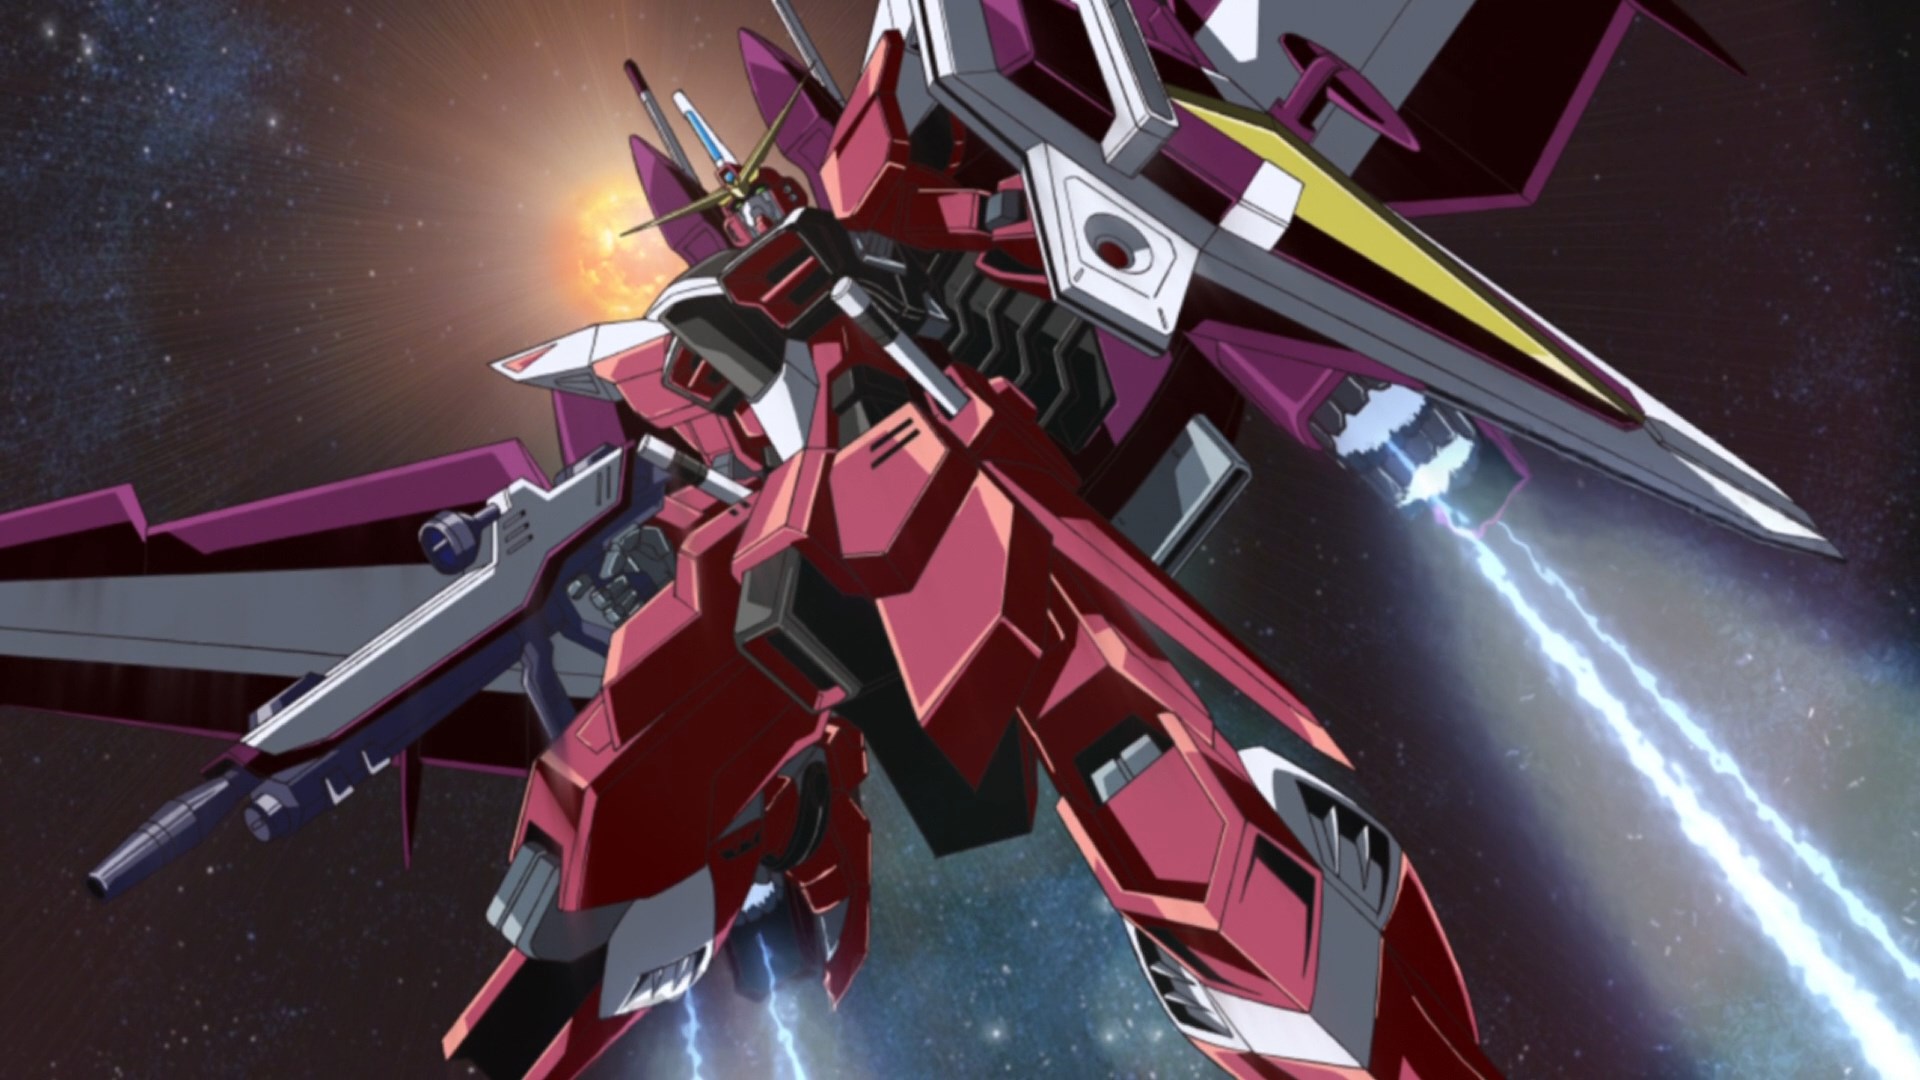 Anime Anime Screenshot Mobile Suit Gundam SEED Gundam Mechs Justice Gundam Artwork Digital Art Super 1920x1080